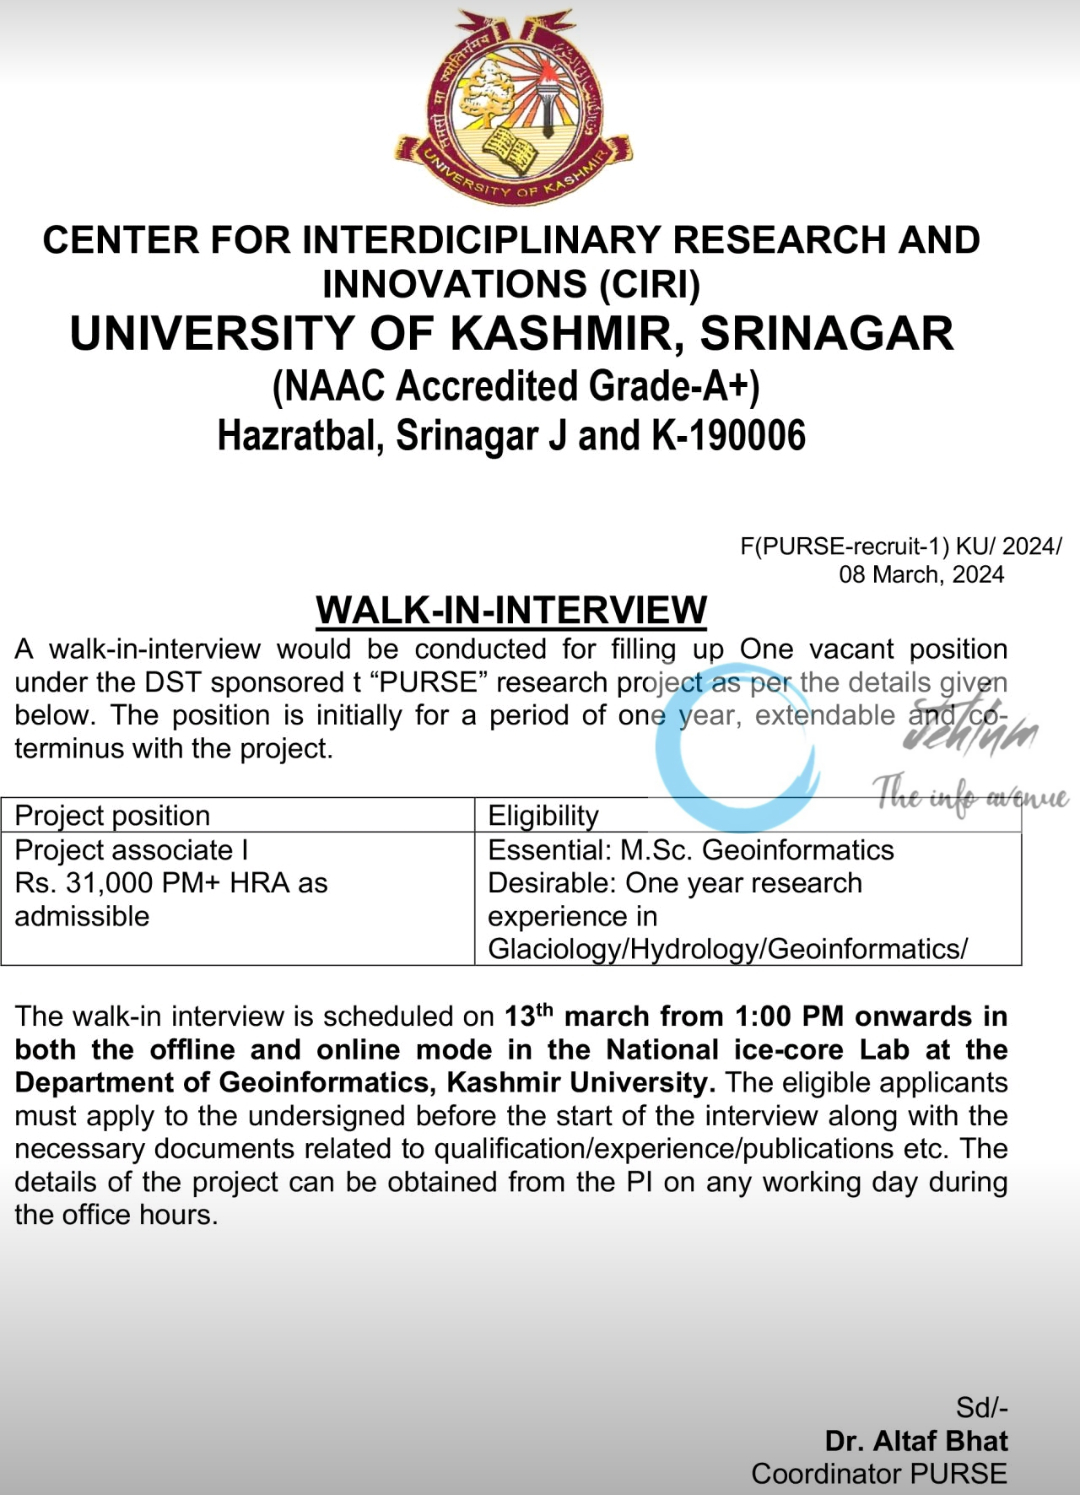 KASHMIR UNIVERSITY CENTER FOR INTERDICIPLINARY RESEARCH AND INNOVATIONS CIRI WALK-IN-INTERVIEW 2024